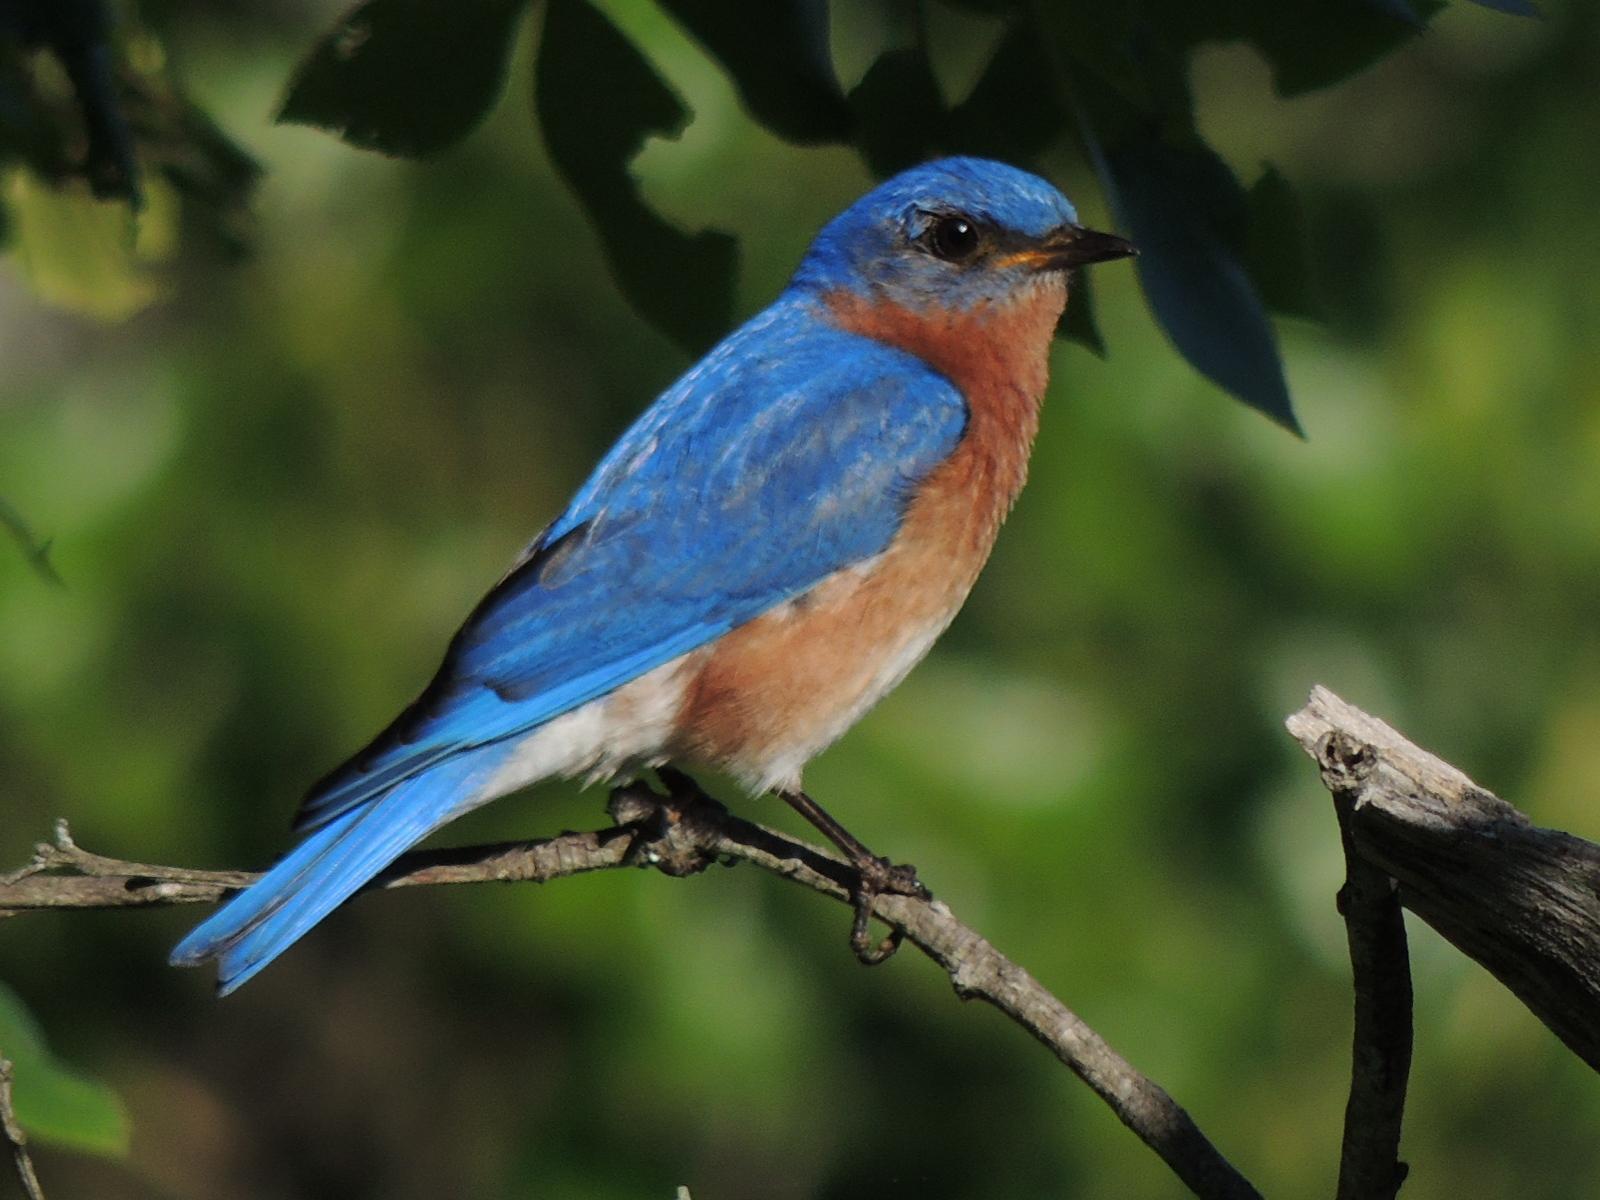 Eastern Bluebird Photo by Tony Heindel